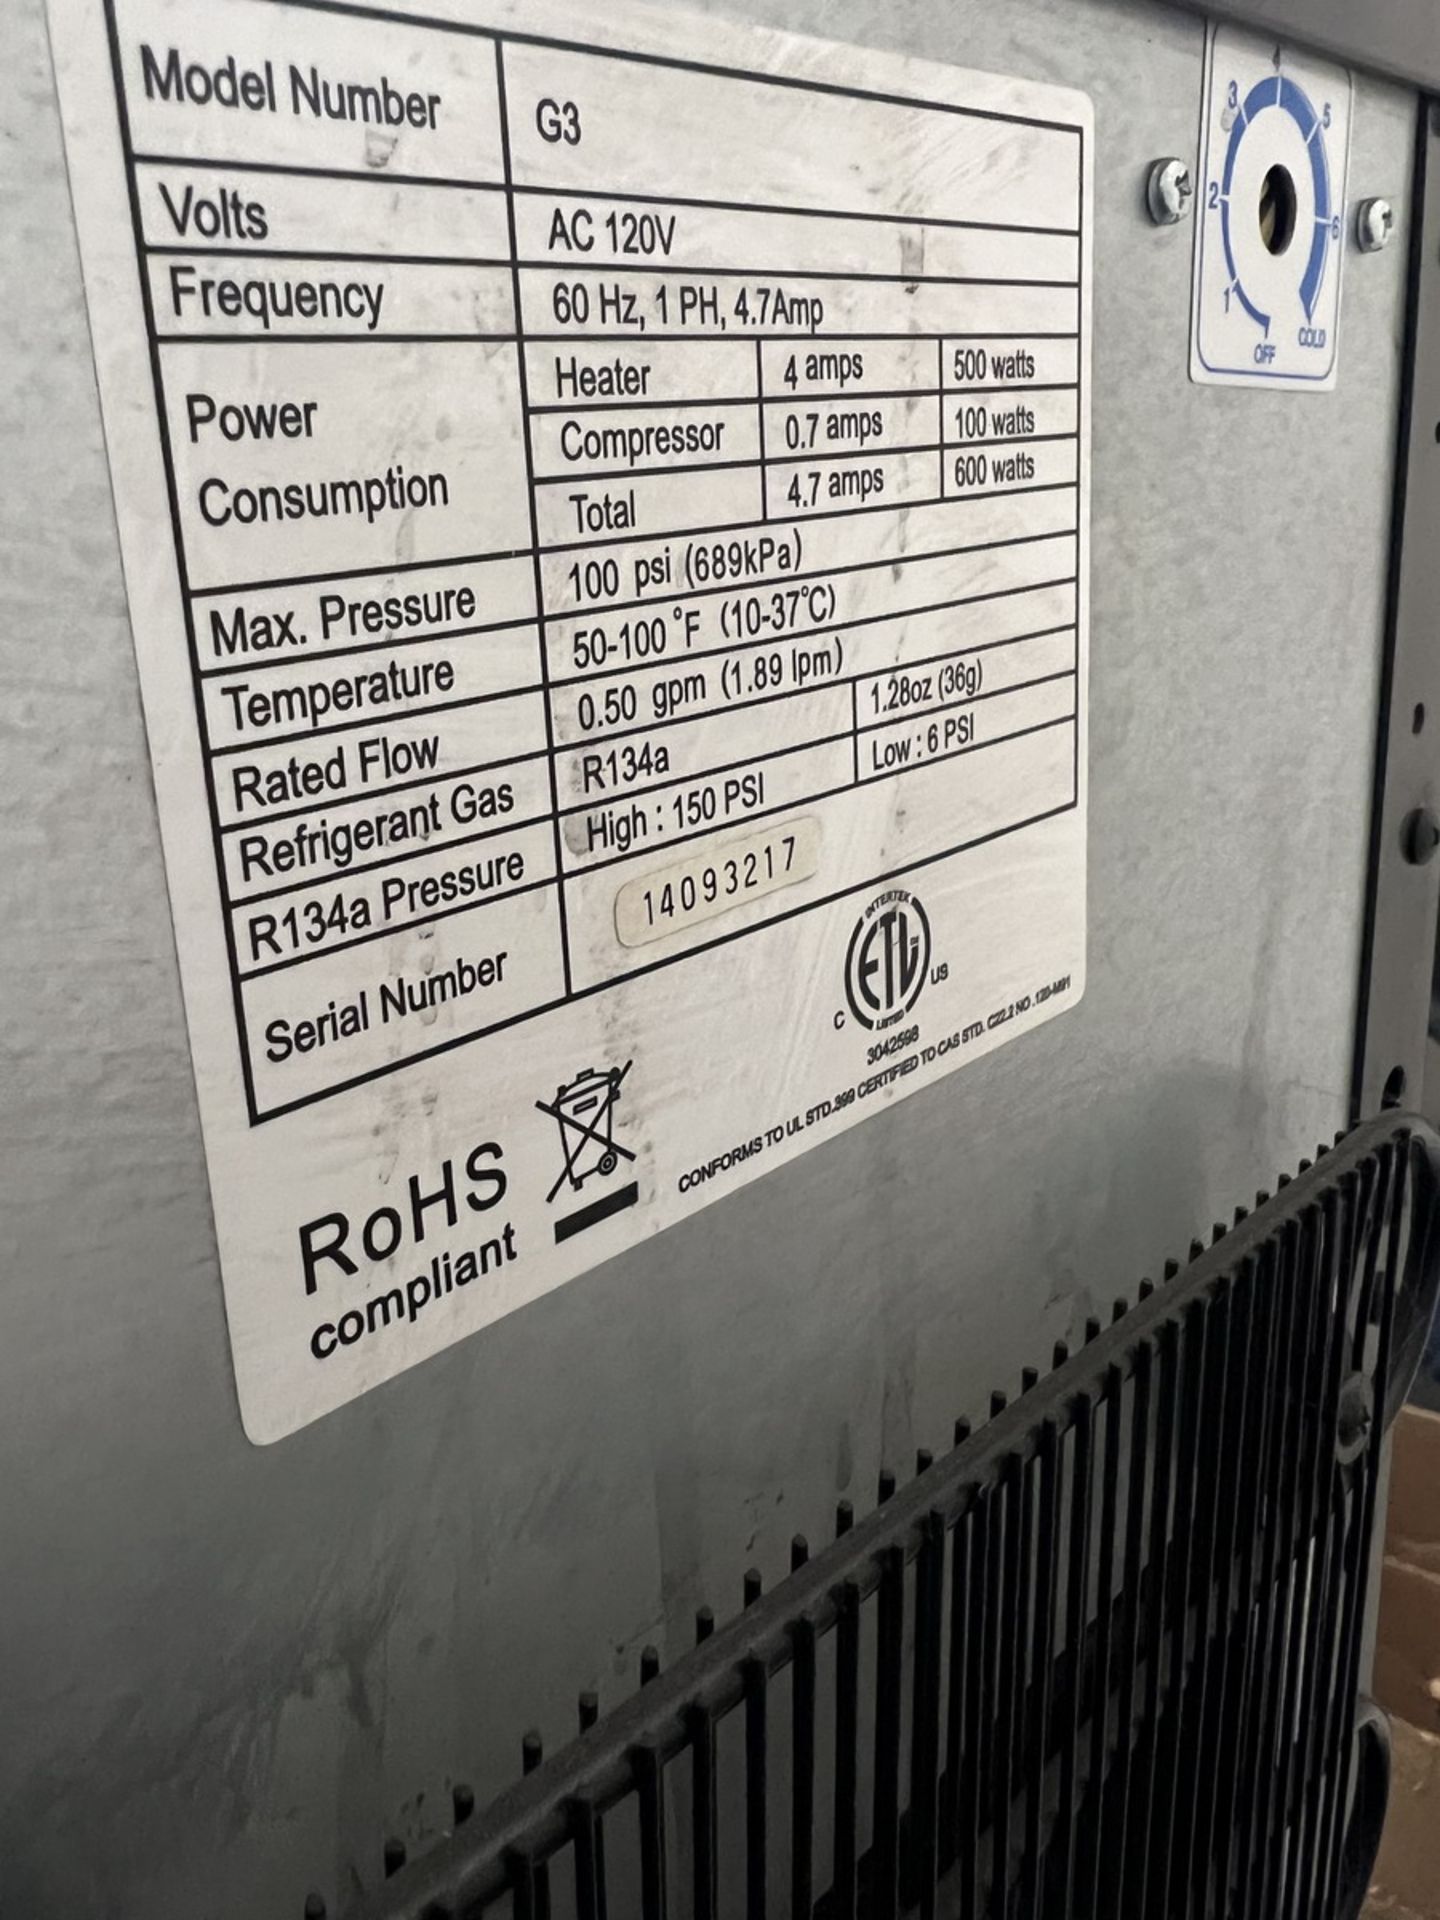 RoHS G3 Water Dispenser 120 V, Max. 100 (PSI) - Image 3 of 3